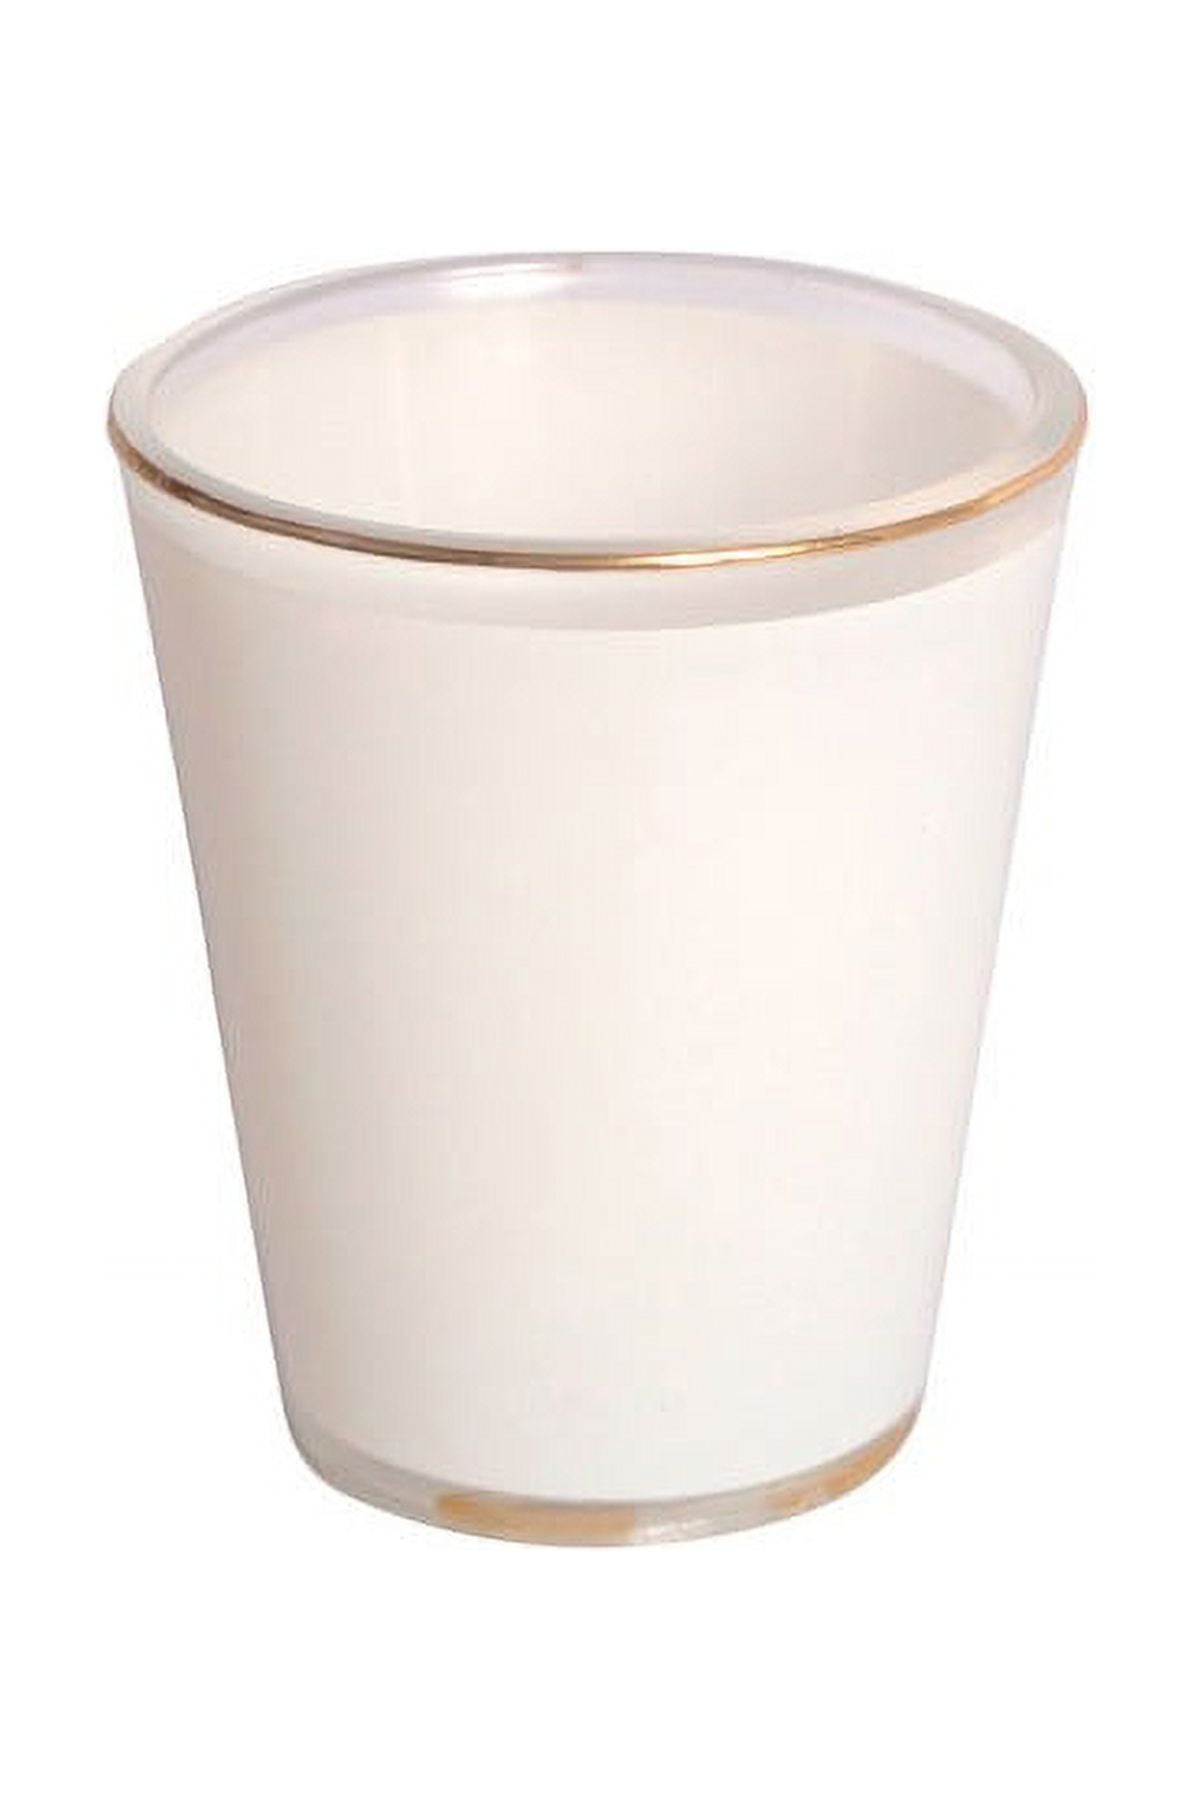 HPN ORCA Premium 11 oz. Black Sublimation Ceramic Mug with White Patch